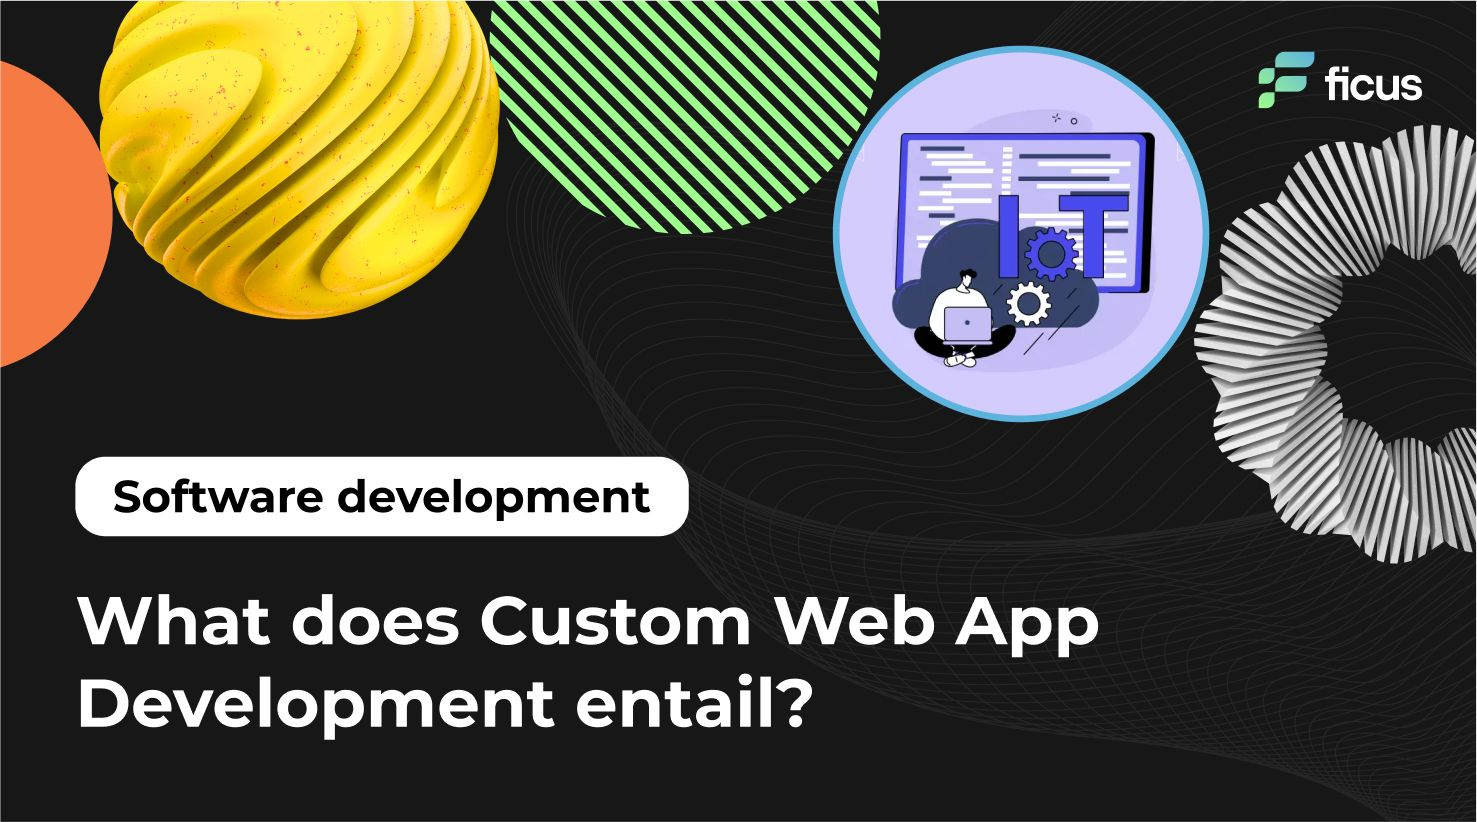 What does Custom Web App Development entail?